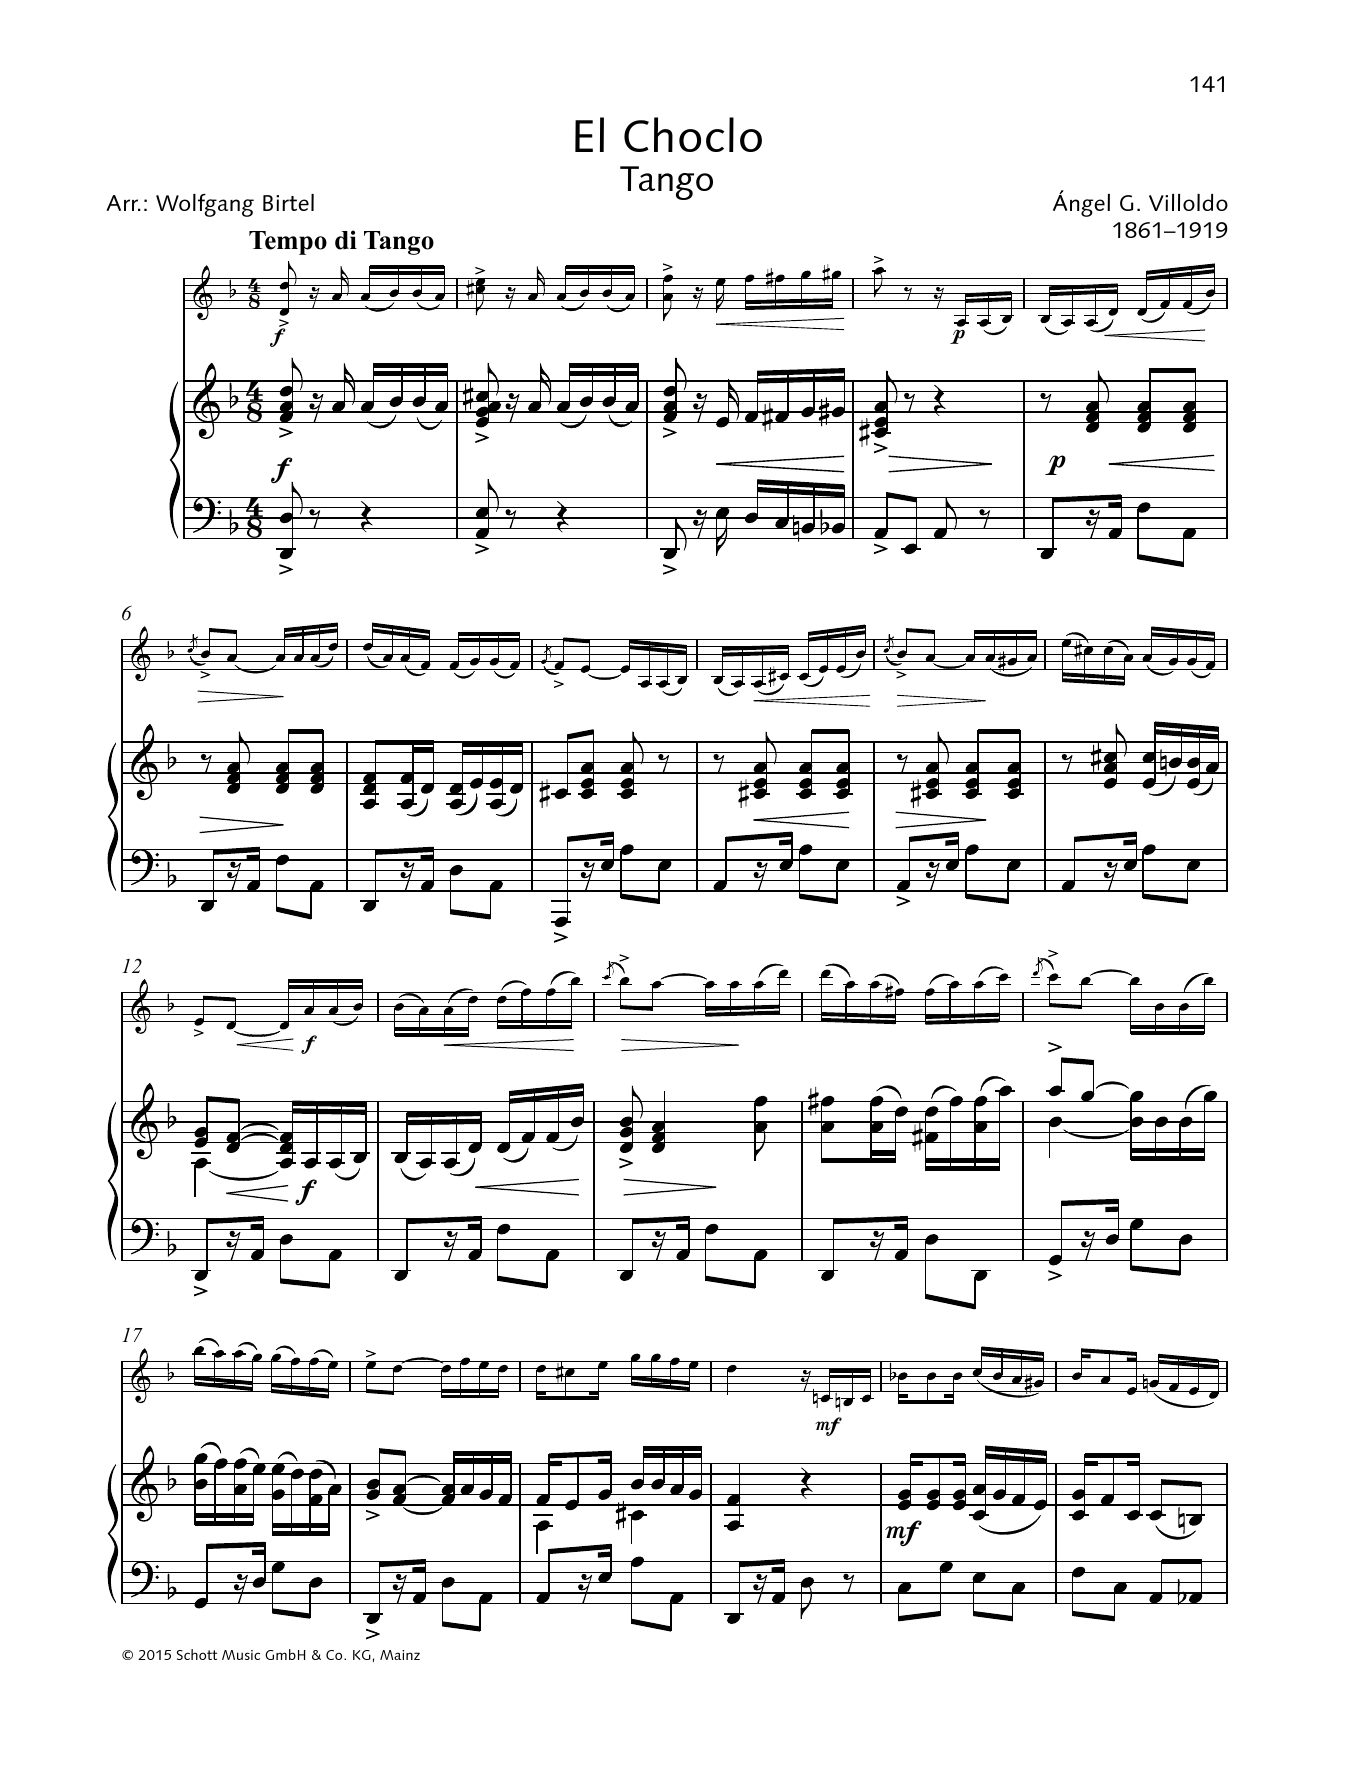 Angel G. Villoldo El Choclo Sheet Music Notes & Chords for String Solo - Download or Print PDF